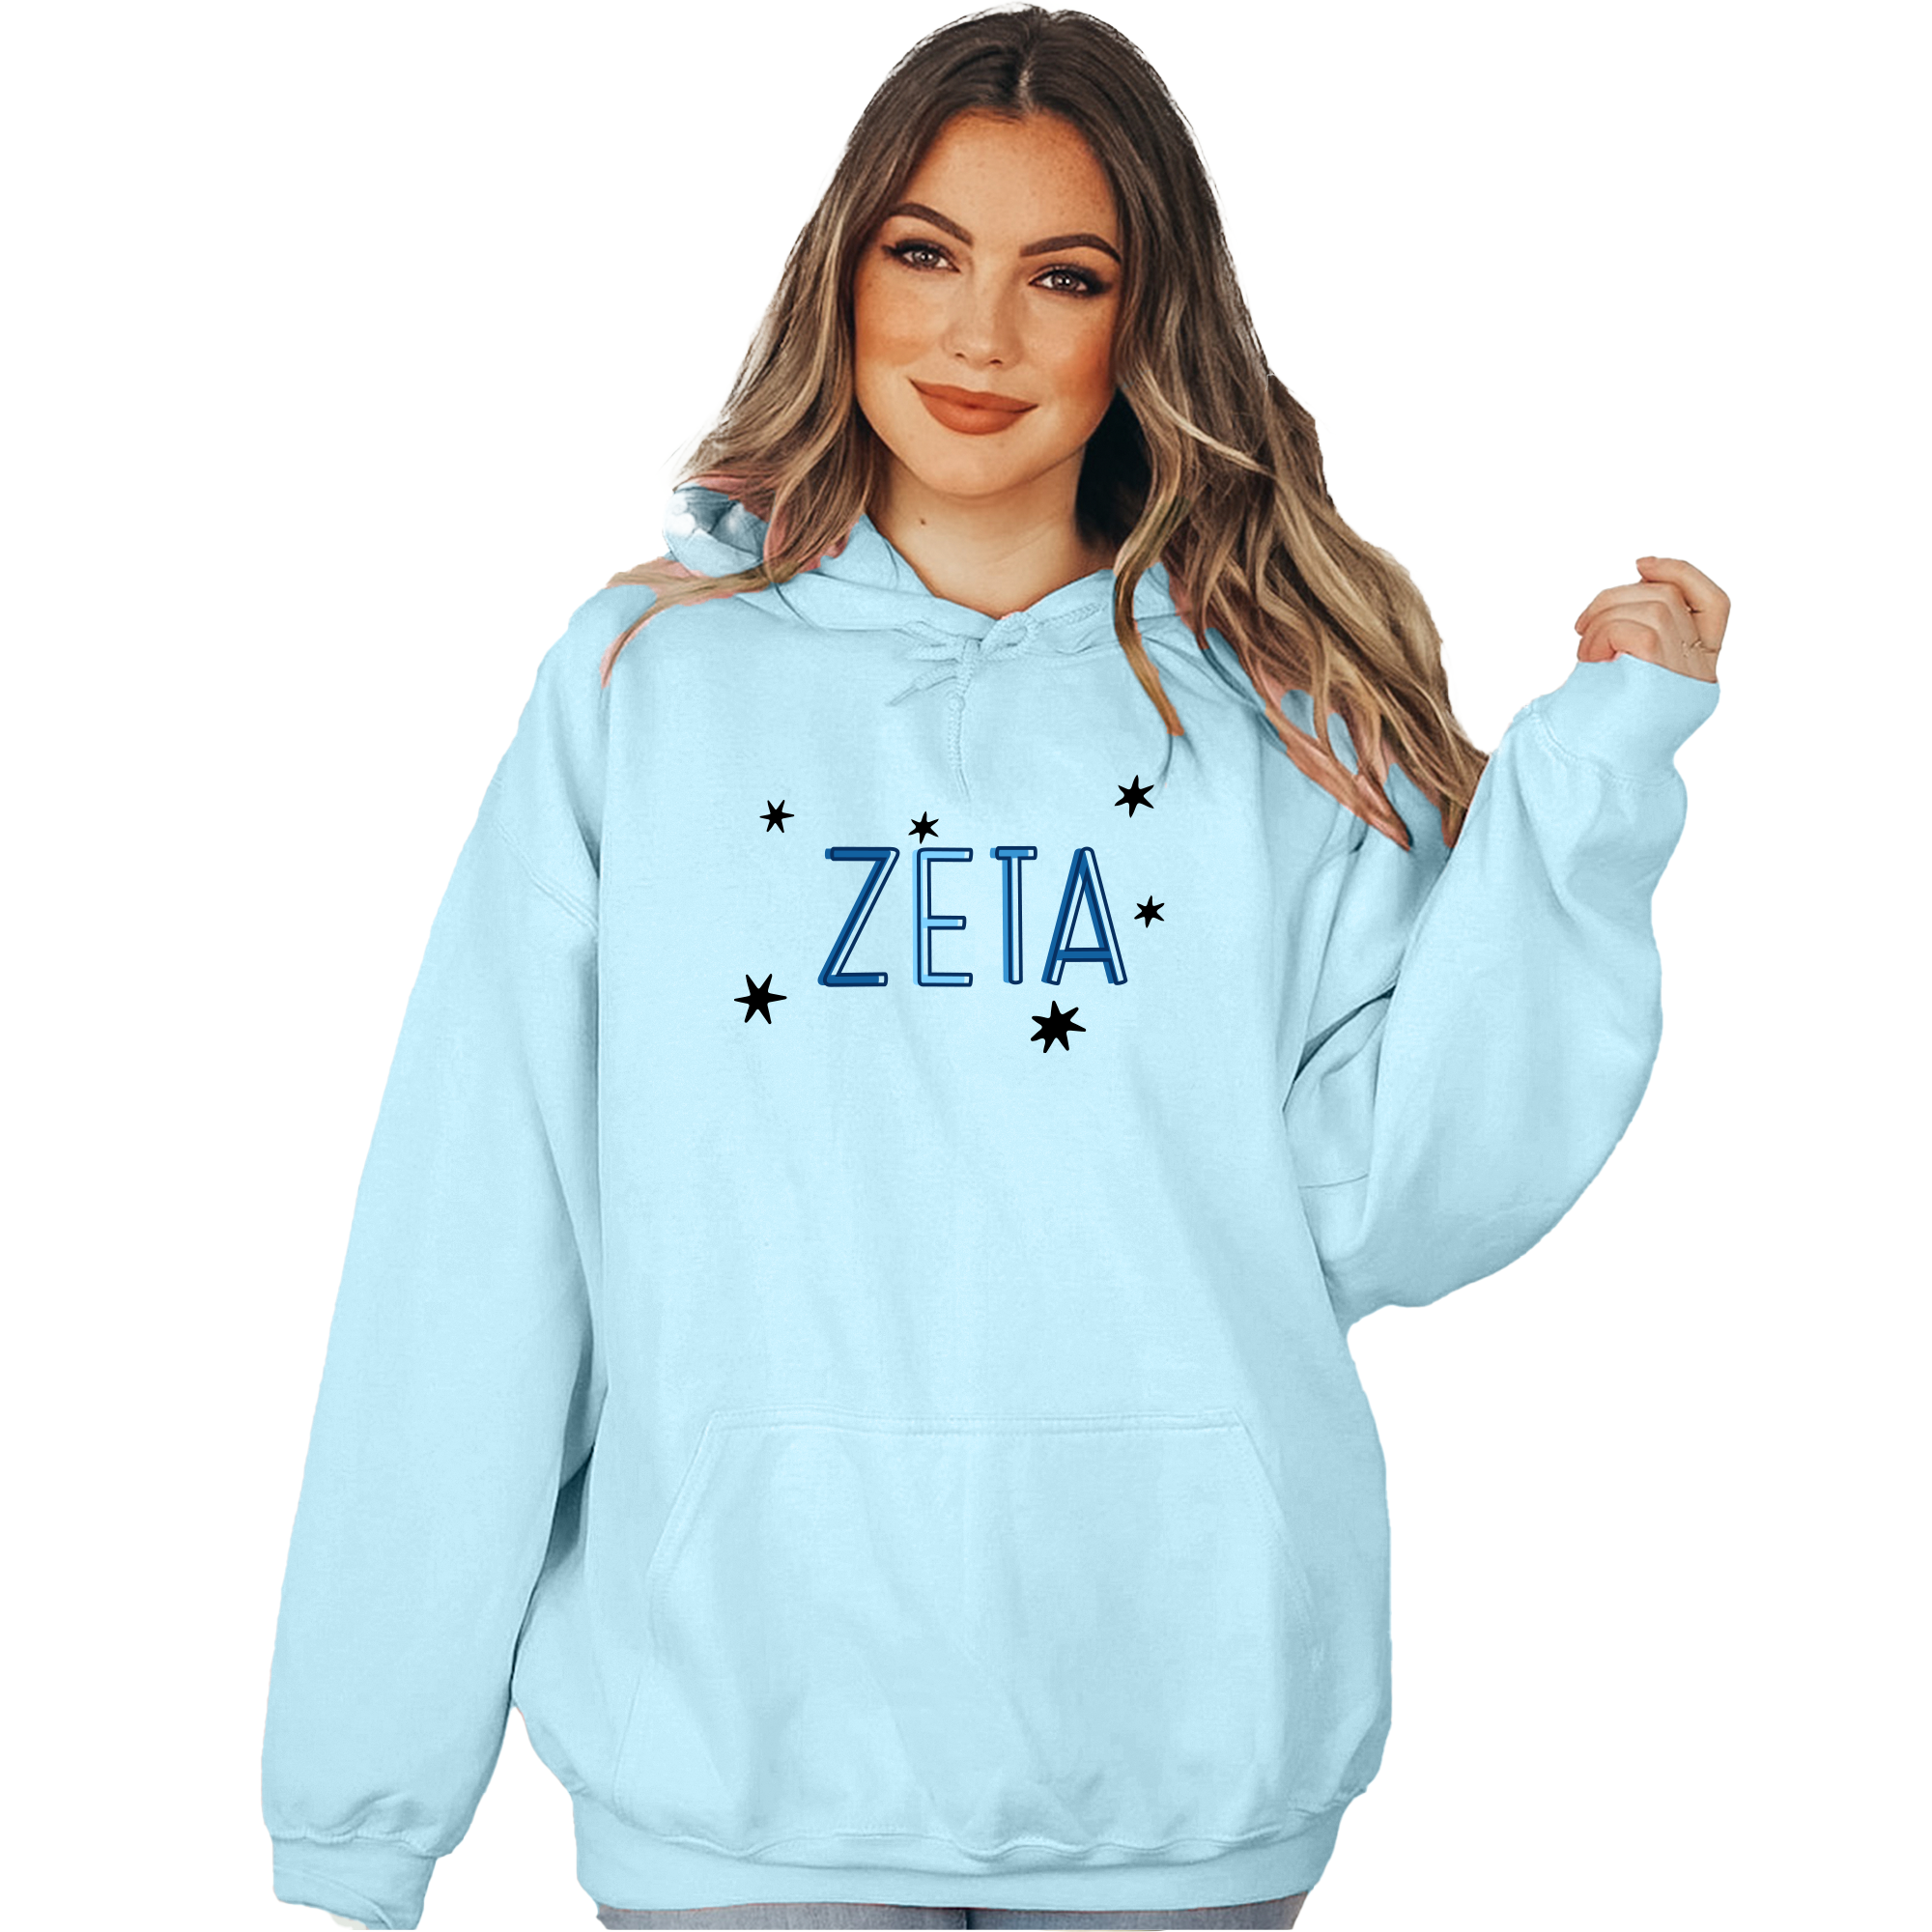 Zeta Tau Alpha Hoodie - Zeta, Sparkle, Blue Hoodie, Greek Apparel, Big Little Reveal, Initiation - Go Greek Chic